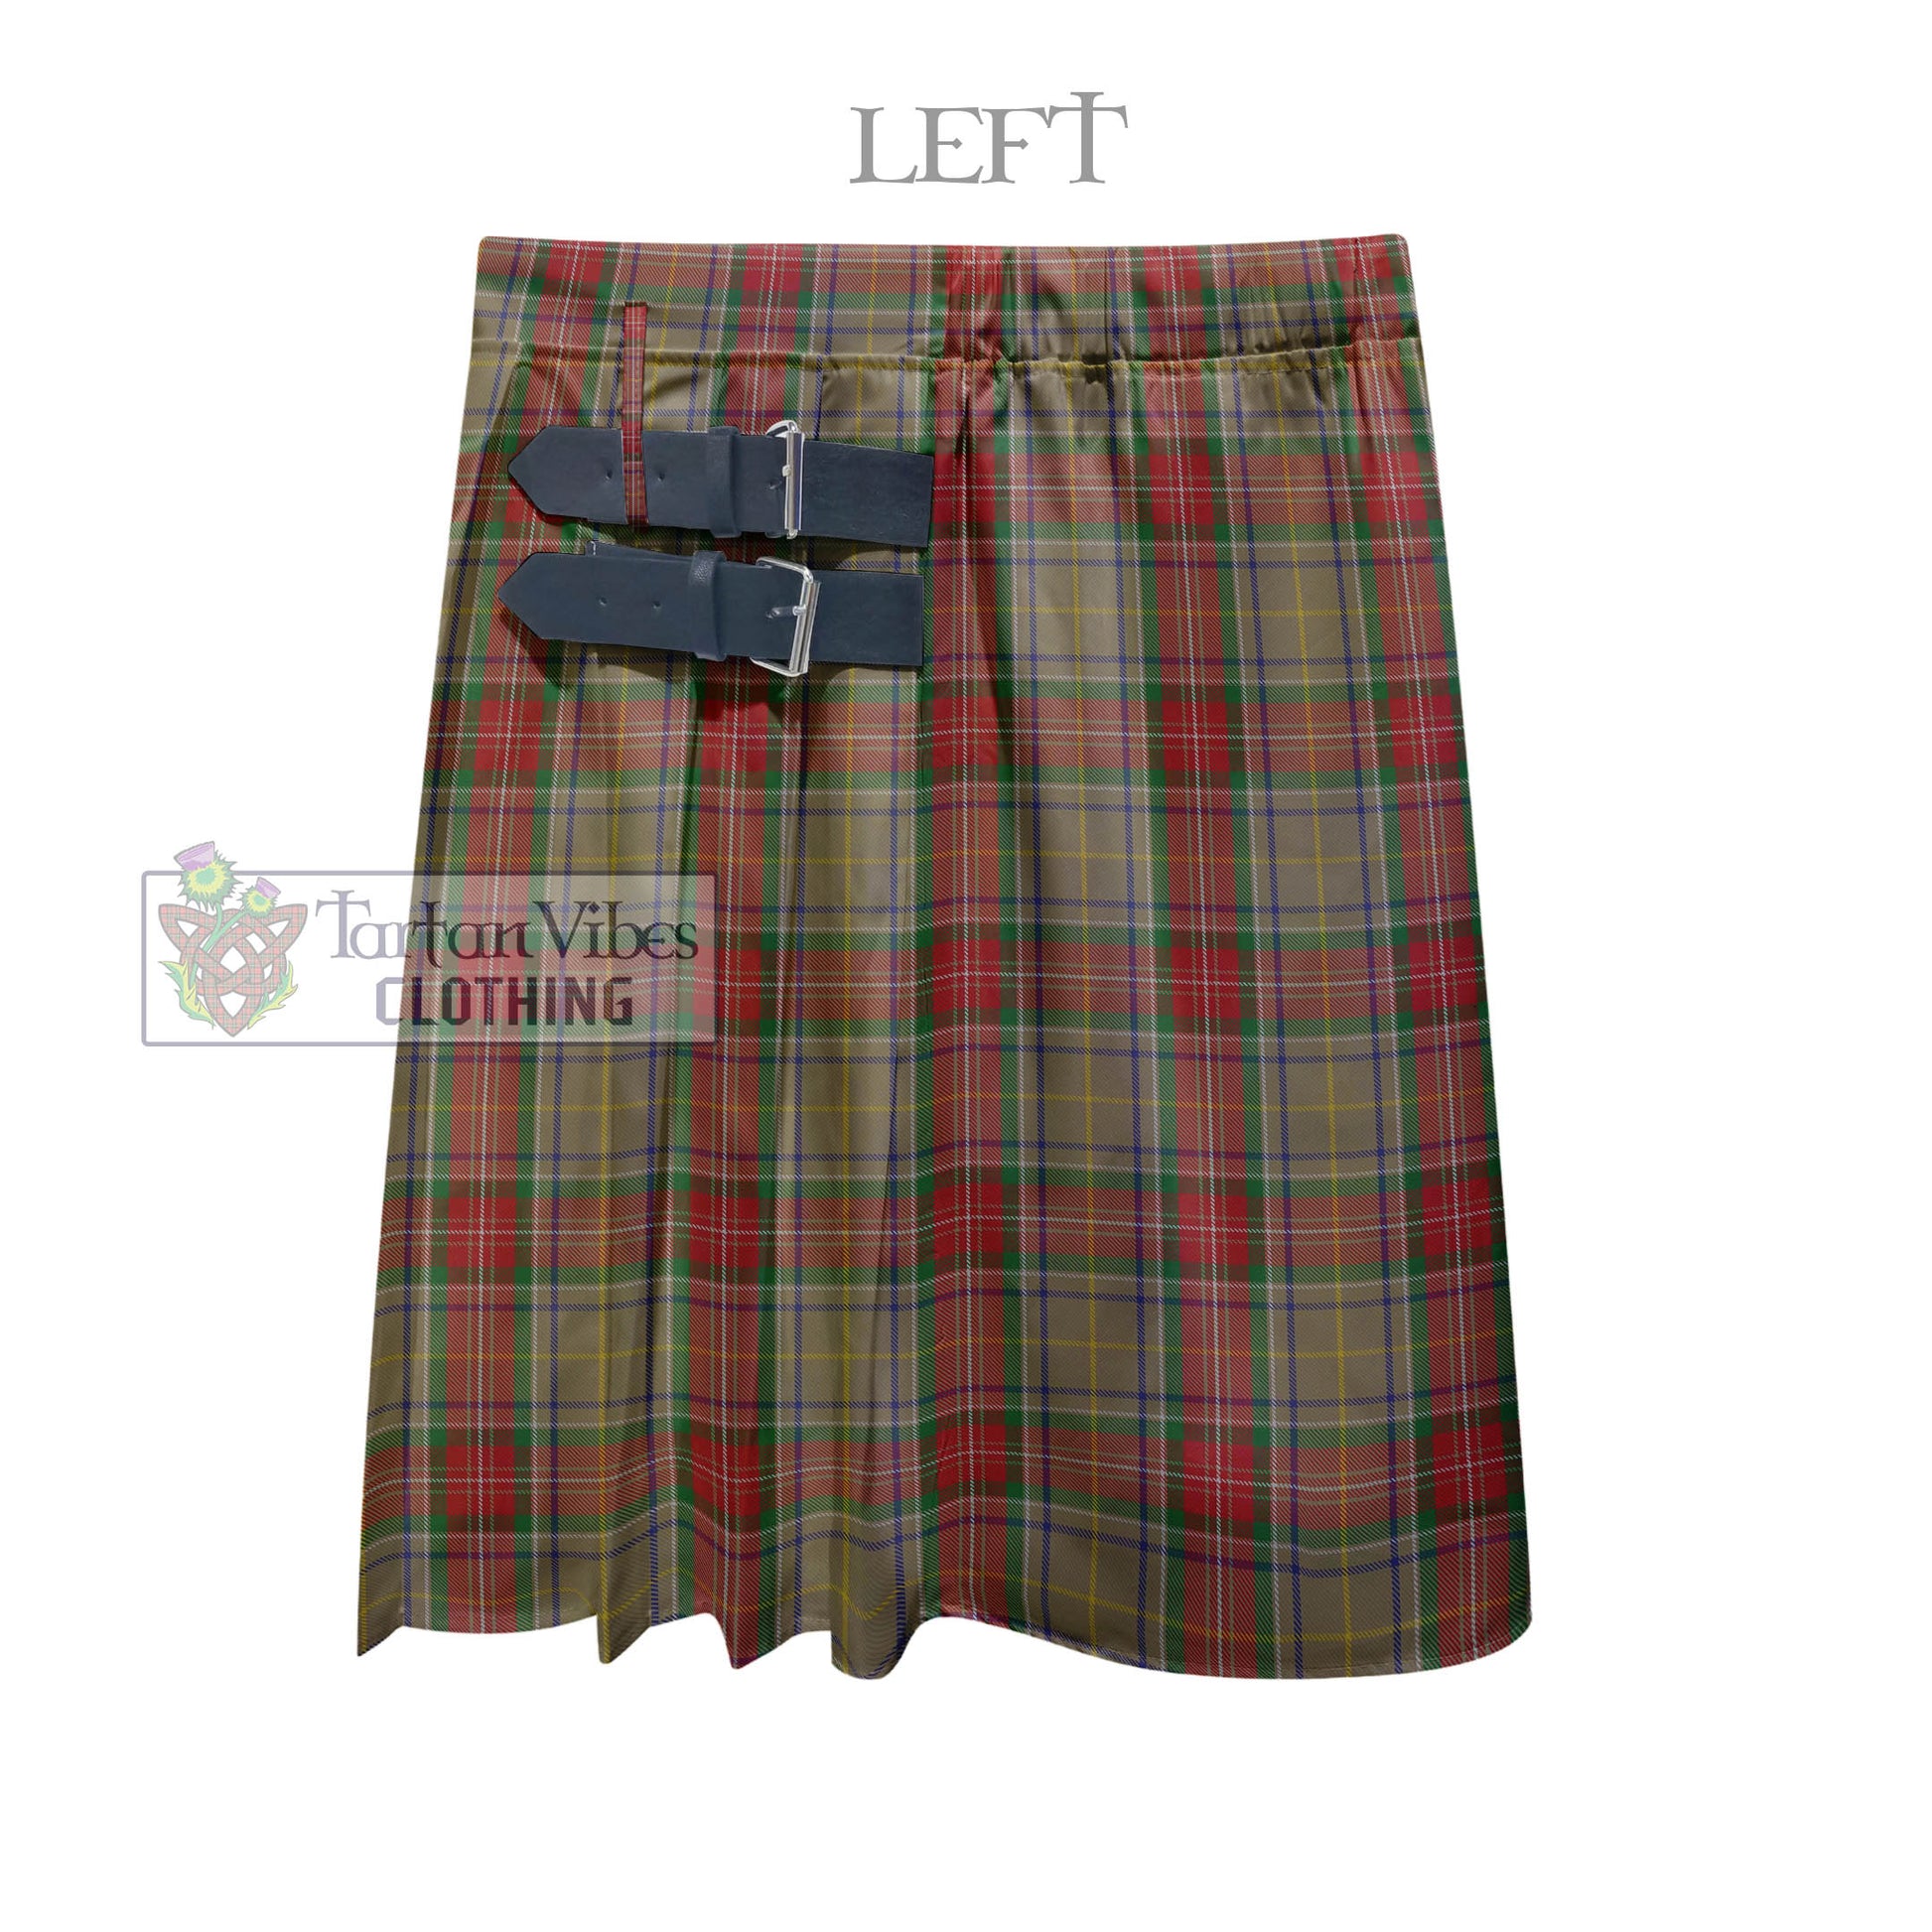 Tartan Vibes Clothing Muirhead Old Tartan Men's Pleated Skirt - Fashion Casual Retro Scottish Style